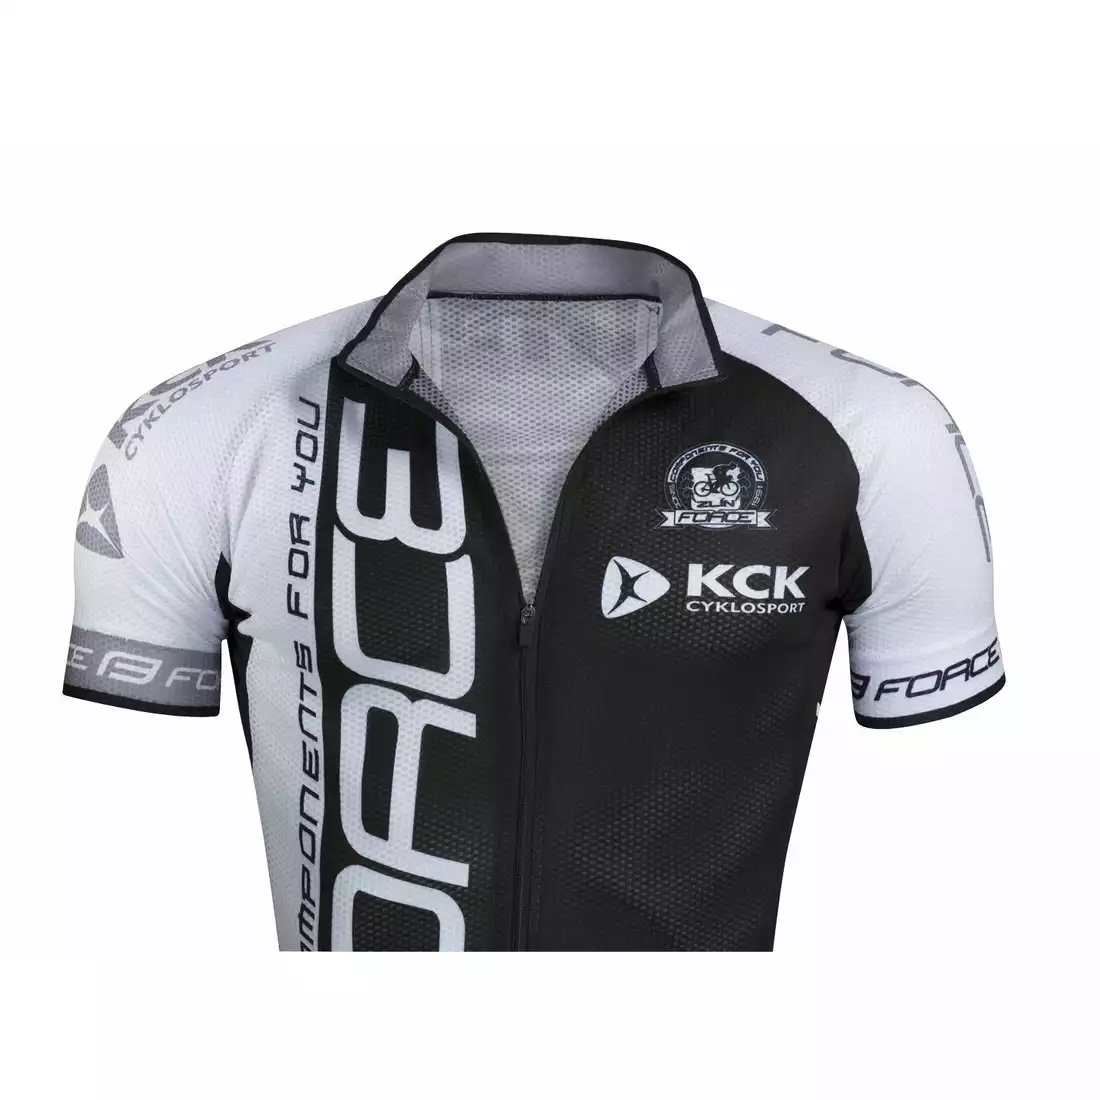 FORCE TEAM męska koszulka rowerowa czarno-biała 900856